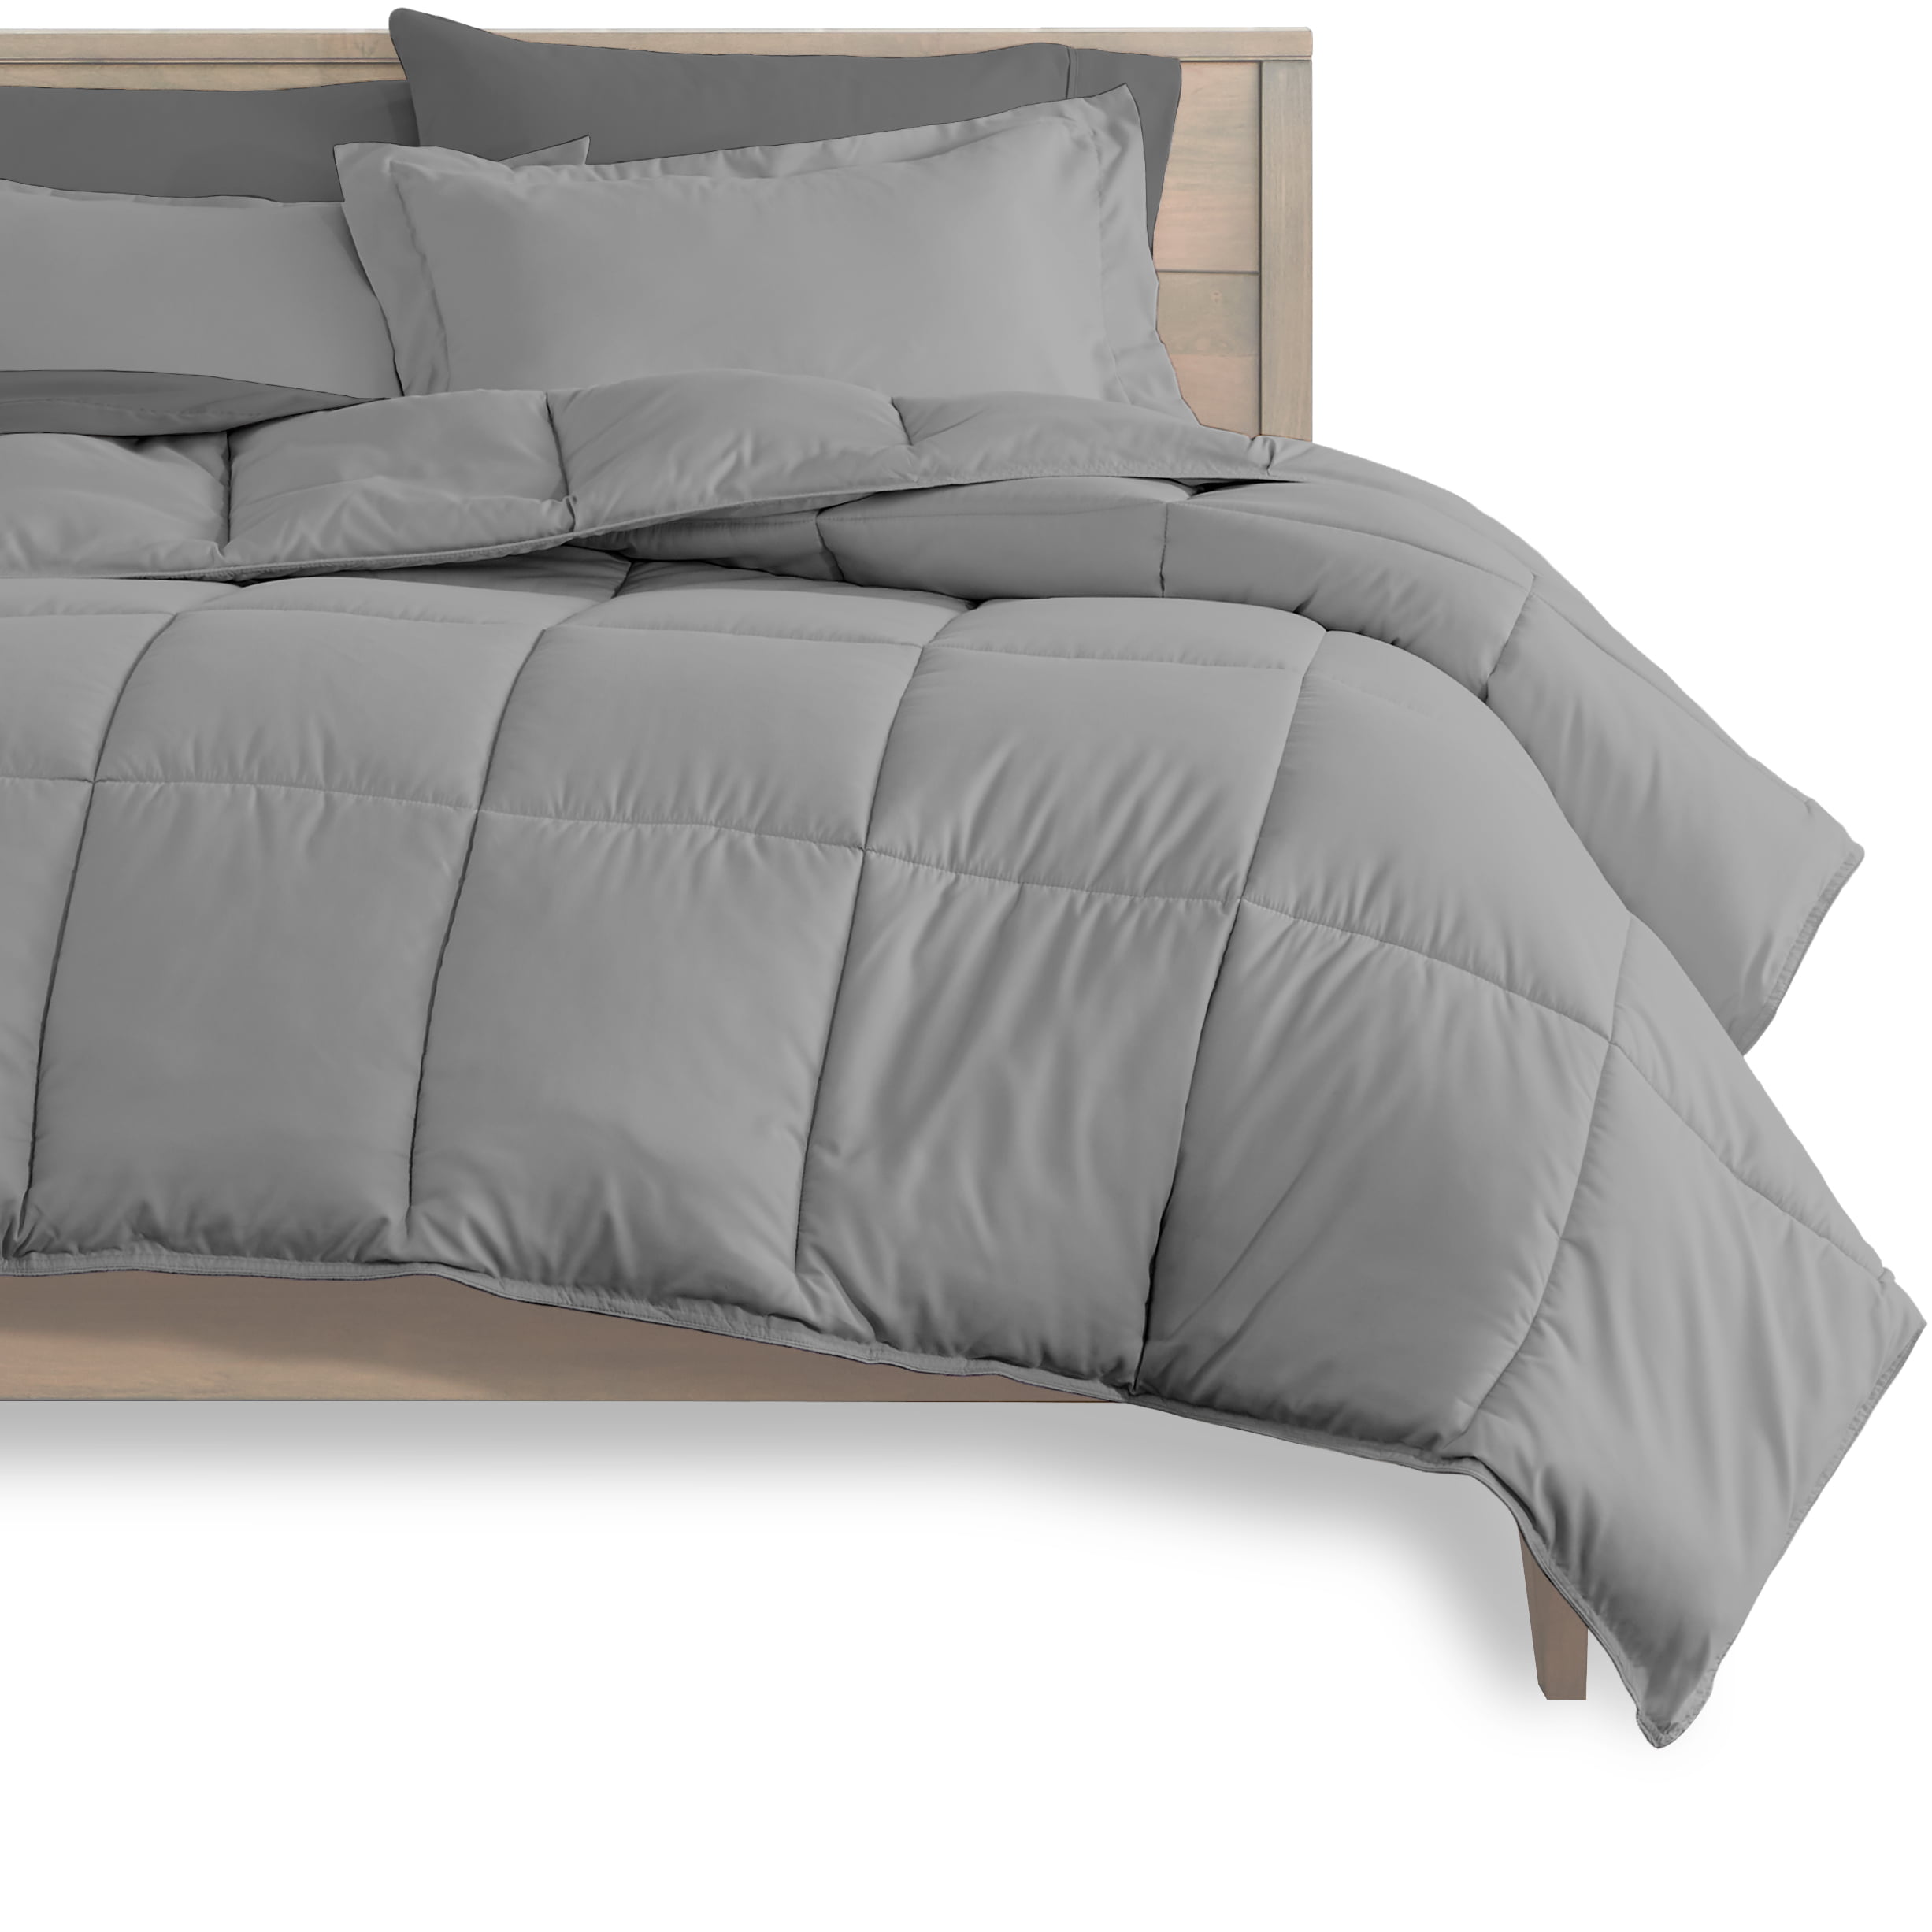 Bed In A Bag Cal King Comforter Set, California King Gray Bedding